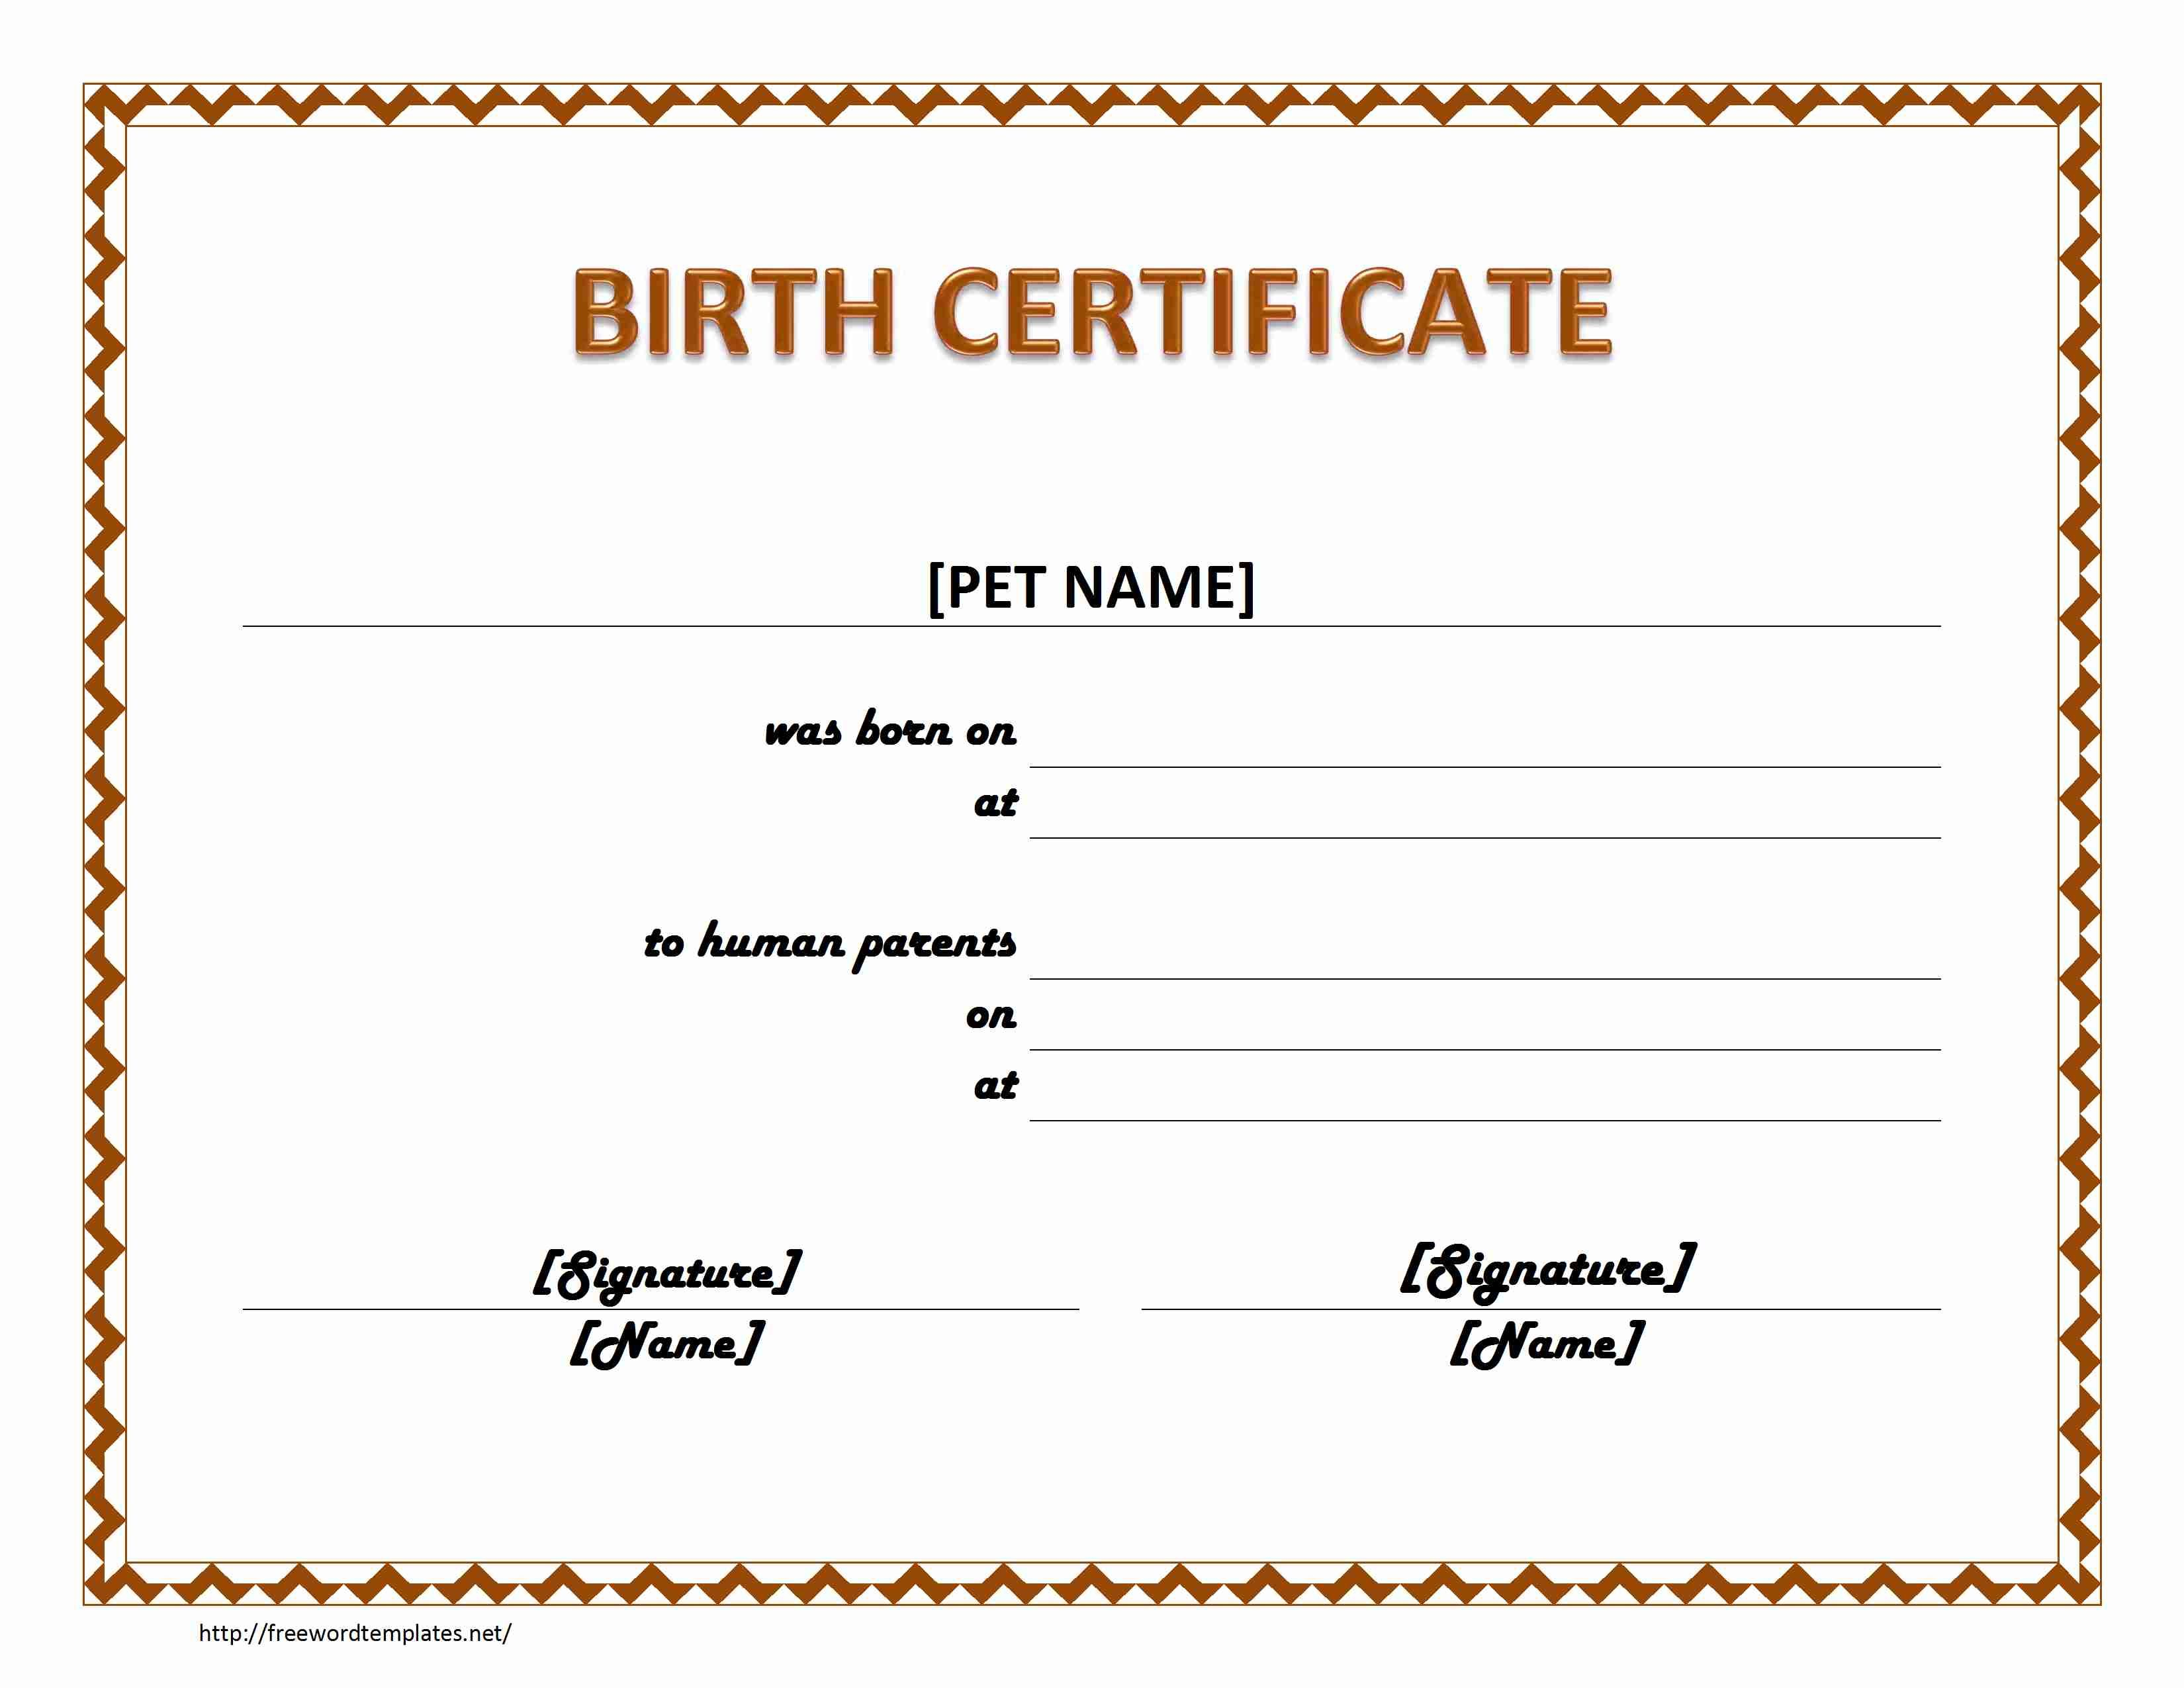 Pet Birth Certificate Maker | Pet Birth Certificate For Word Within Editable Birth Certificate Template